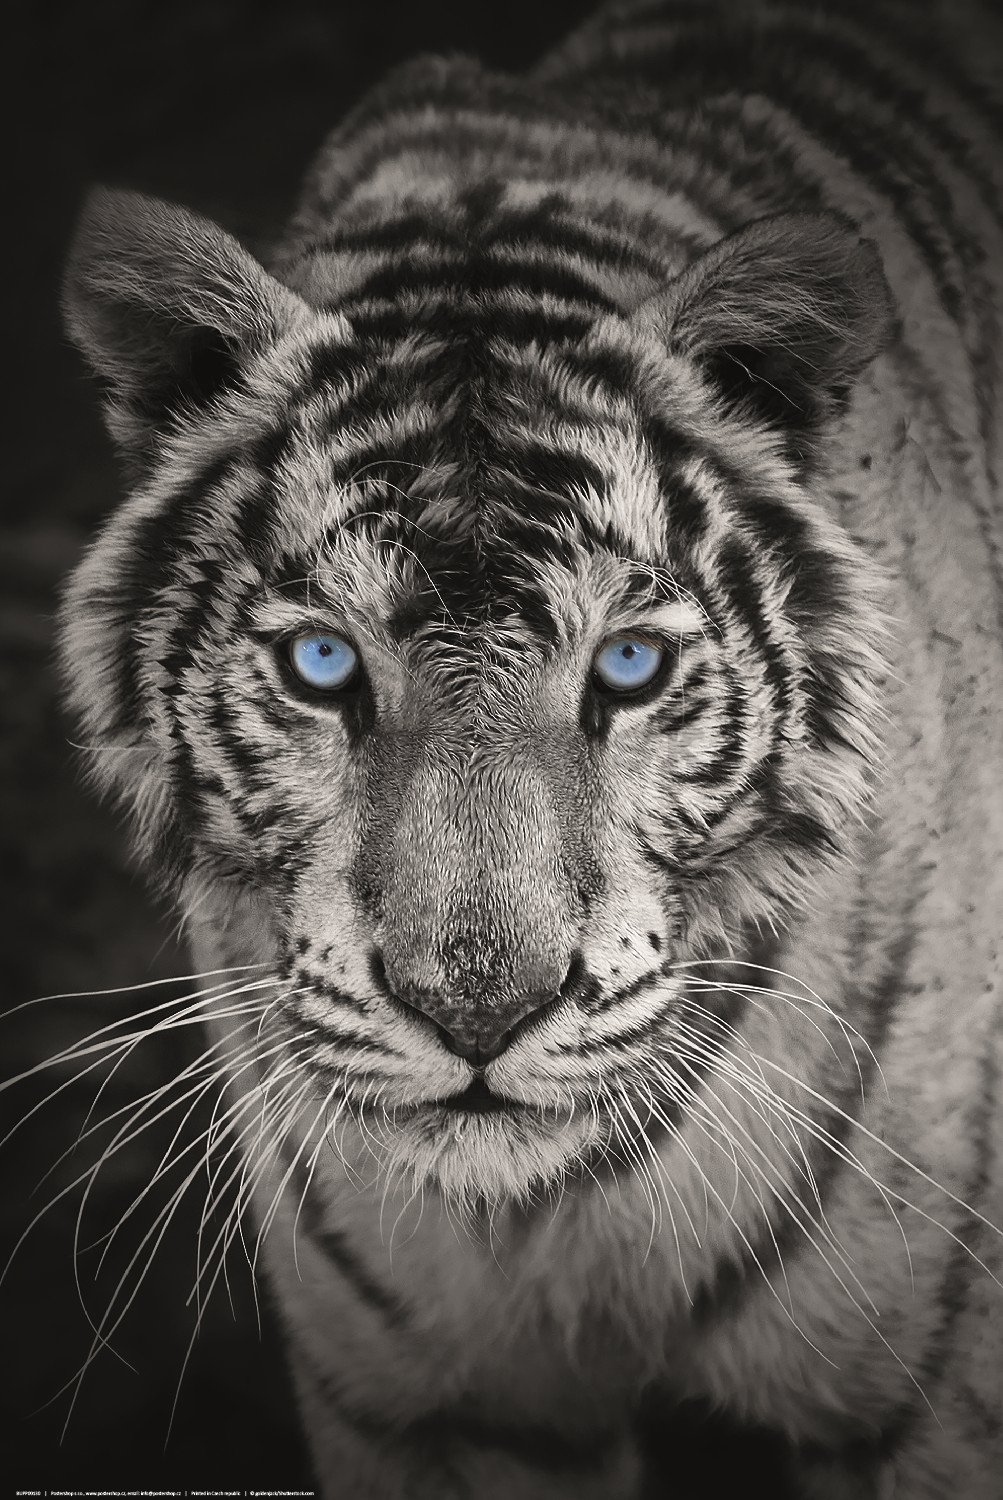 Plagát: Biely tiger (čiernobiely)